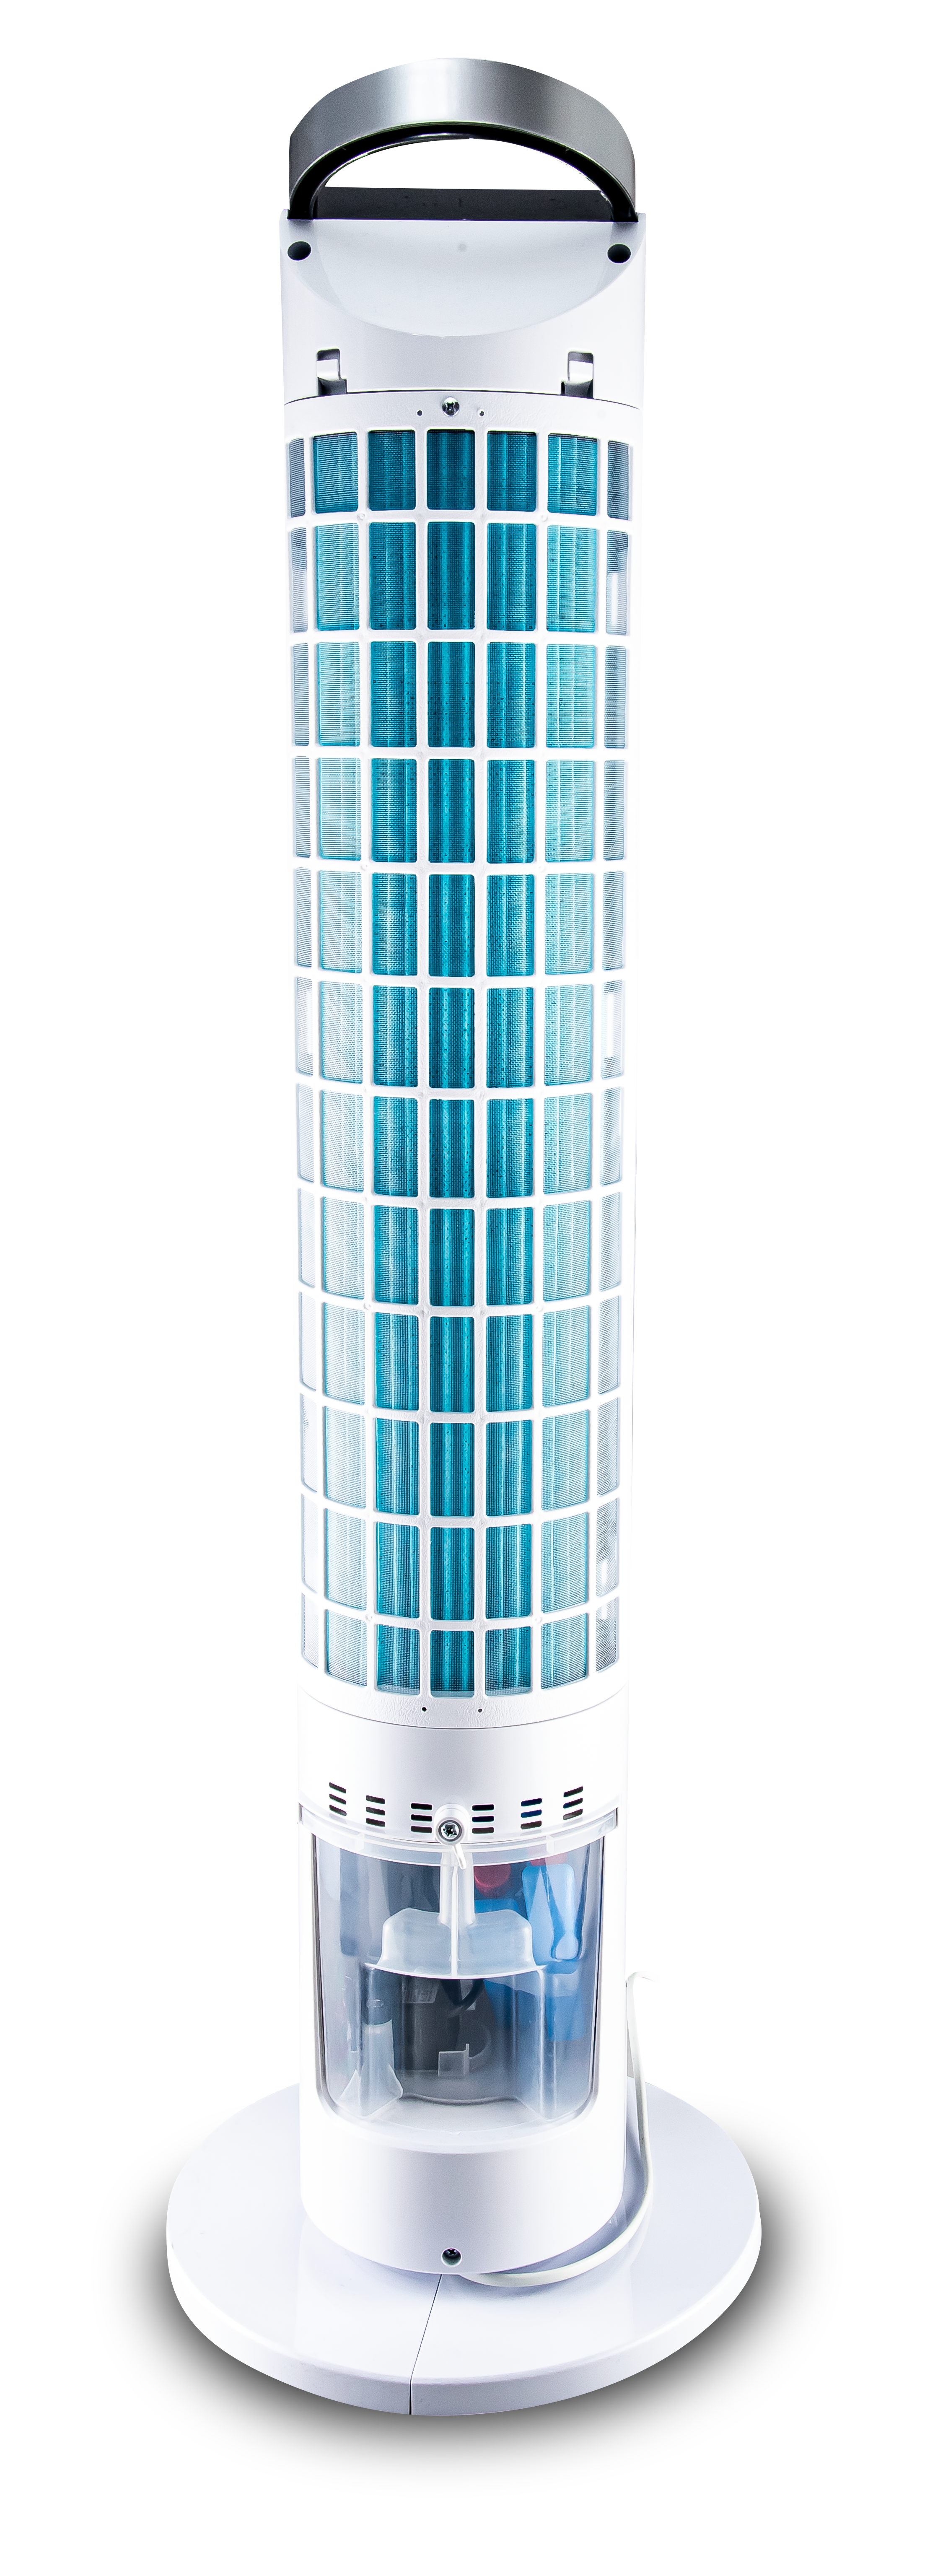 KOENIC KTFC 6020 2IN1 Turmventilator, Weiß (60 Watt) Luftkühler